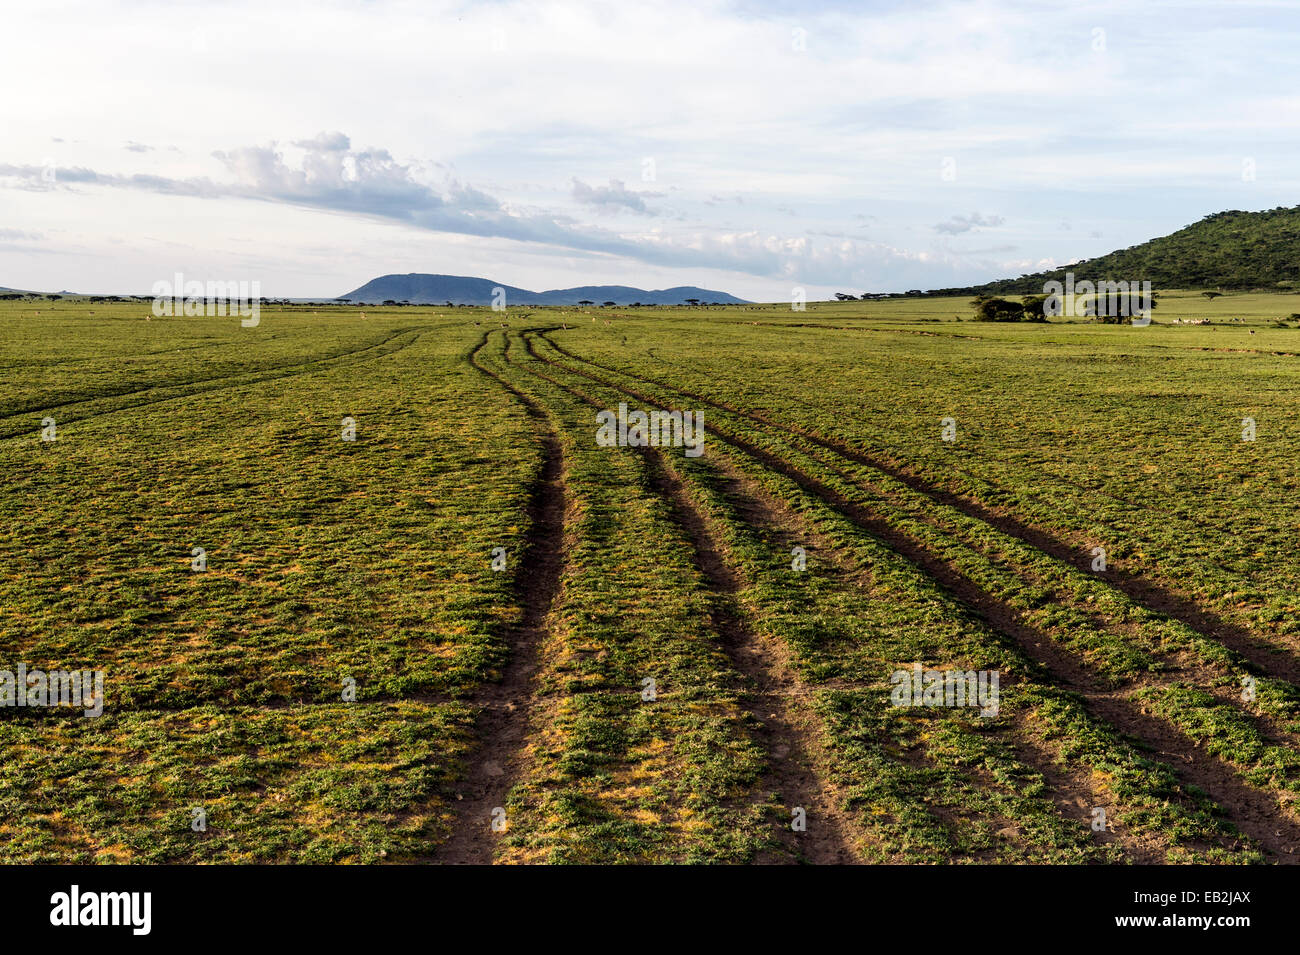 Deep vehicle track ruts cross the savannah plain toward mountains on the horizon. Stock Photo